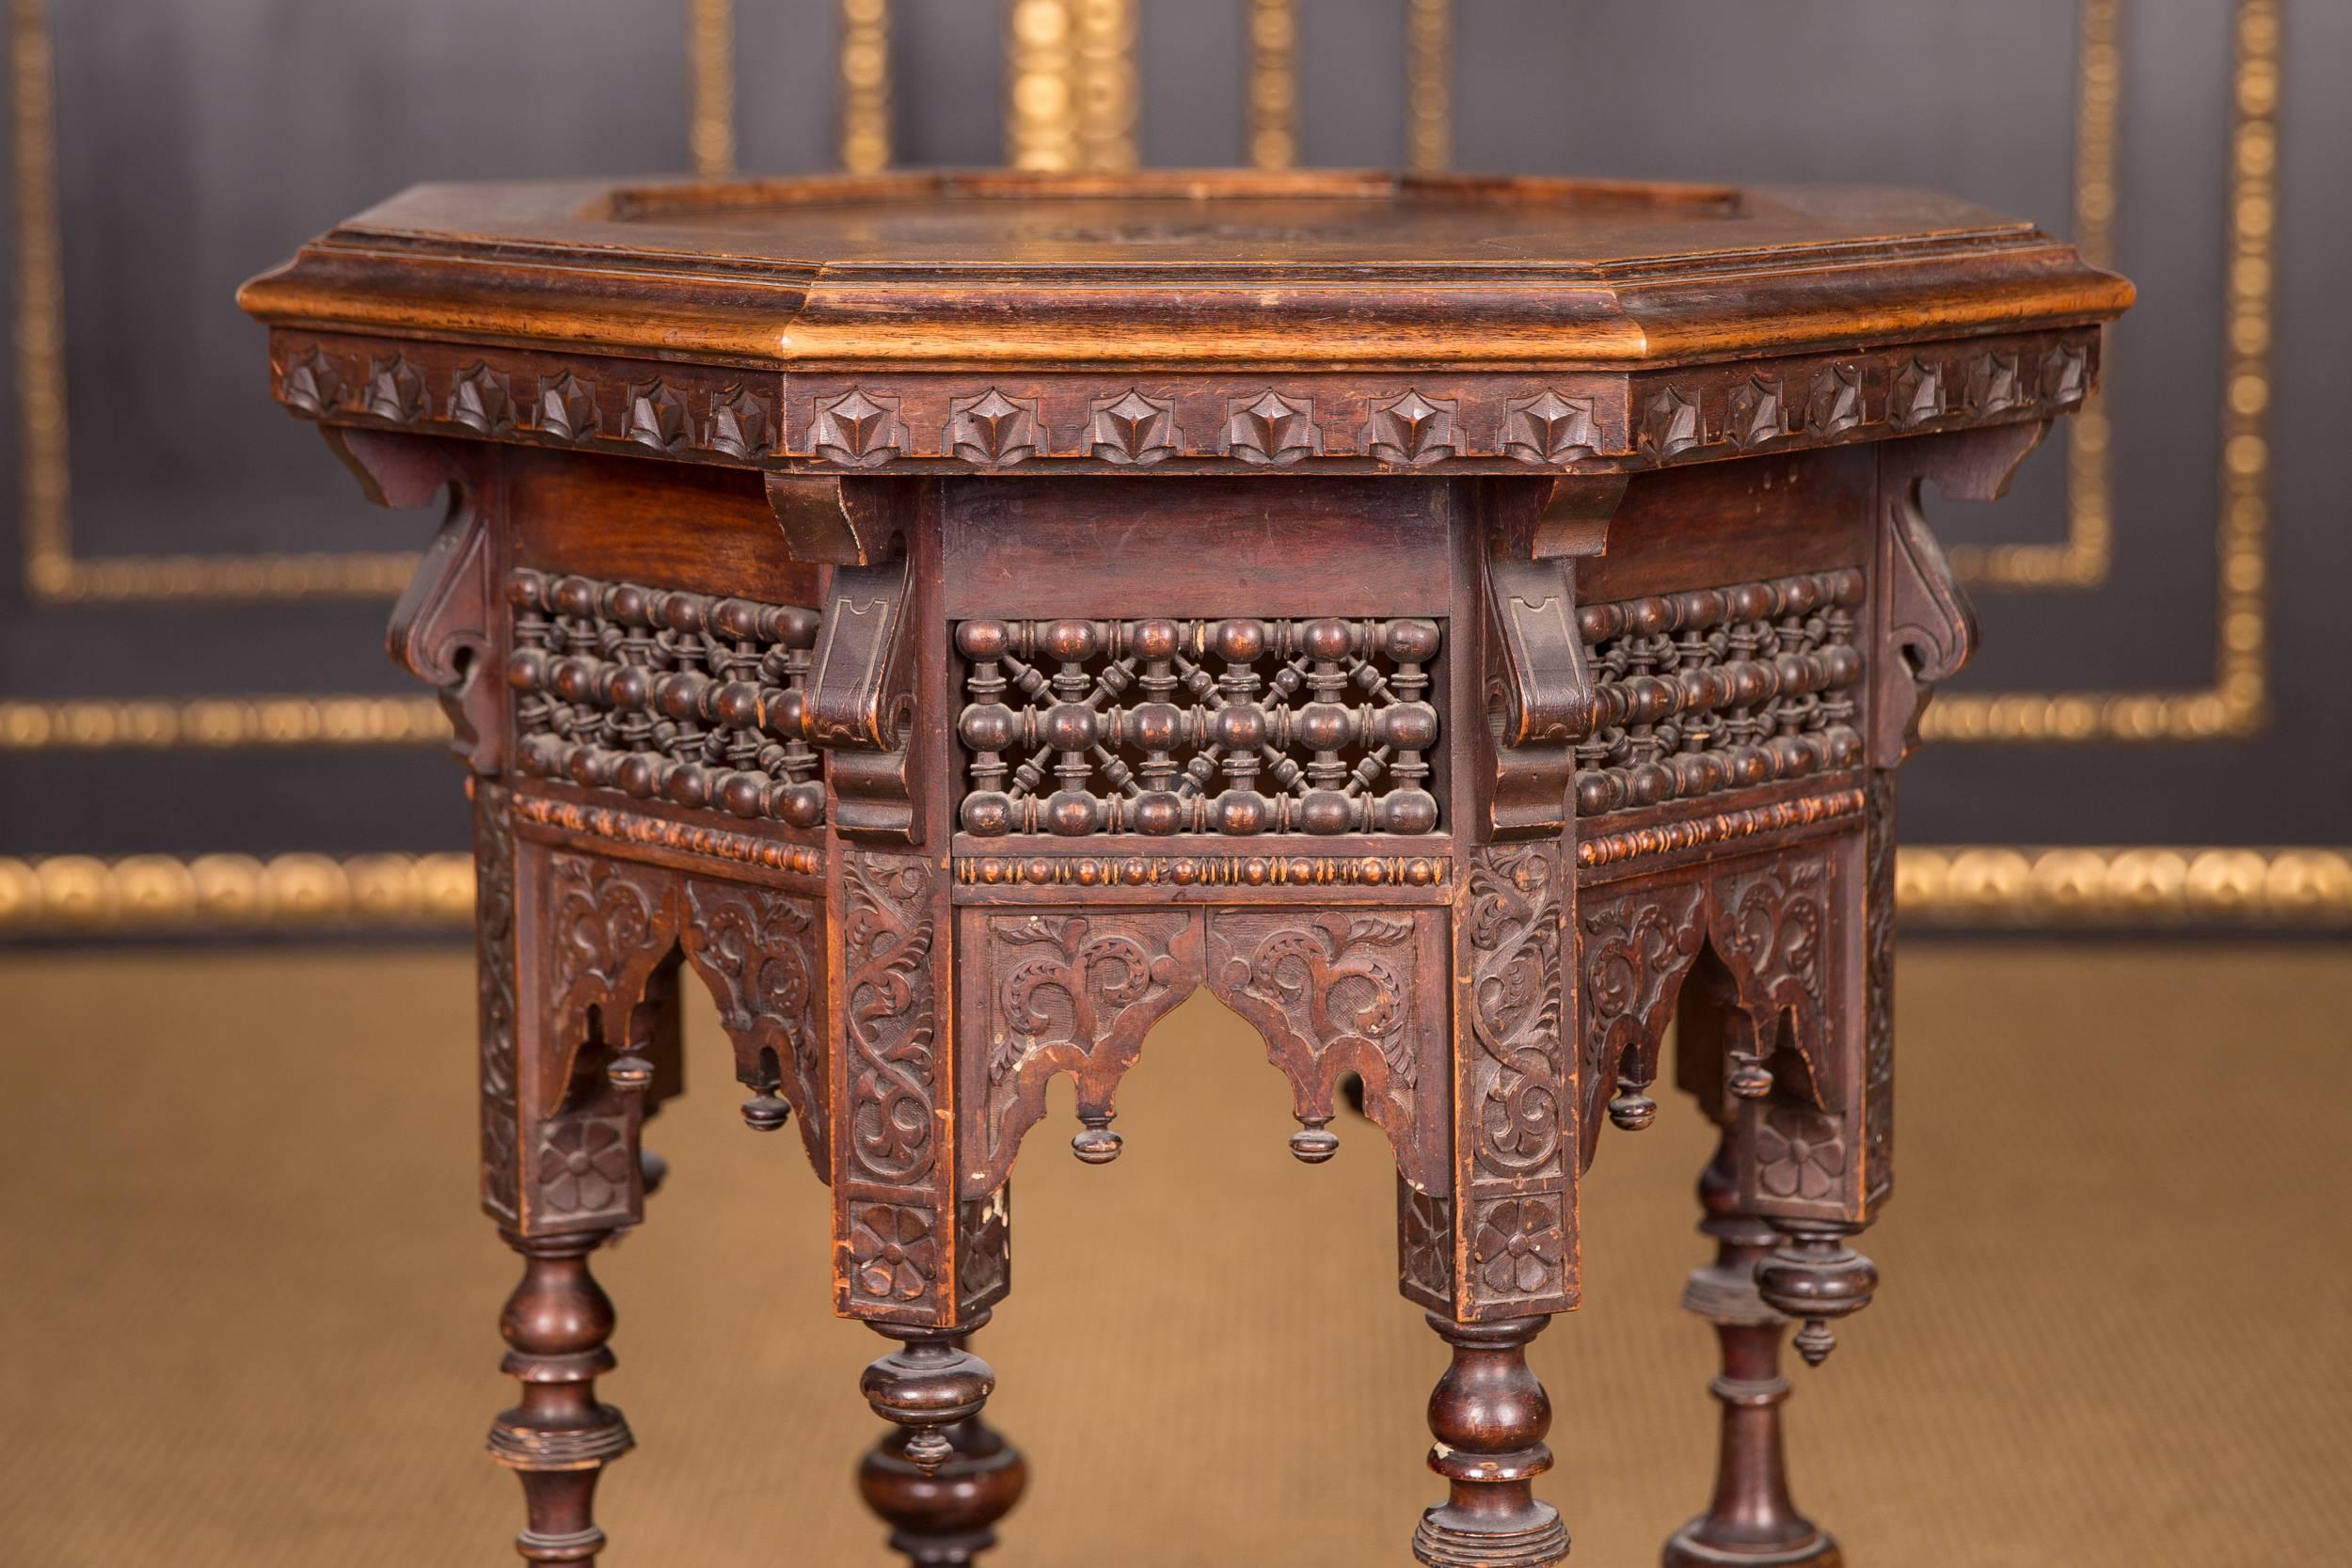 Islamic 19th Century antique Oriental Octogonal Table with Inlaid circa 1900 beech